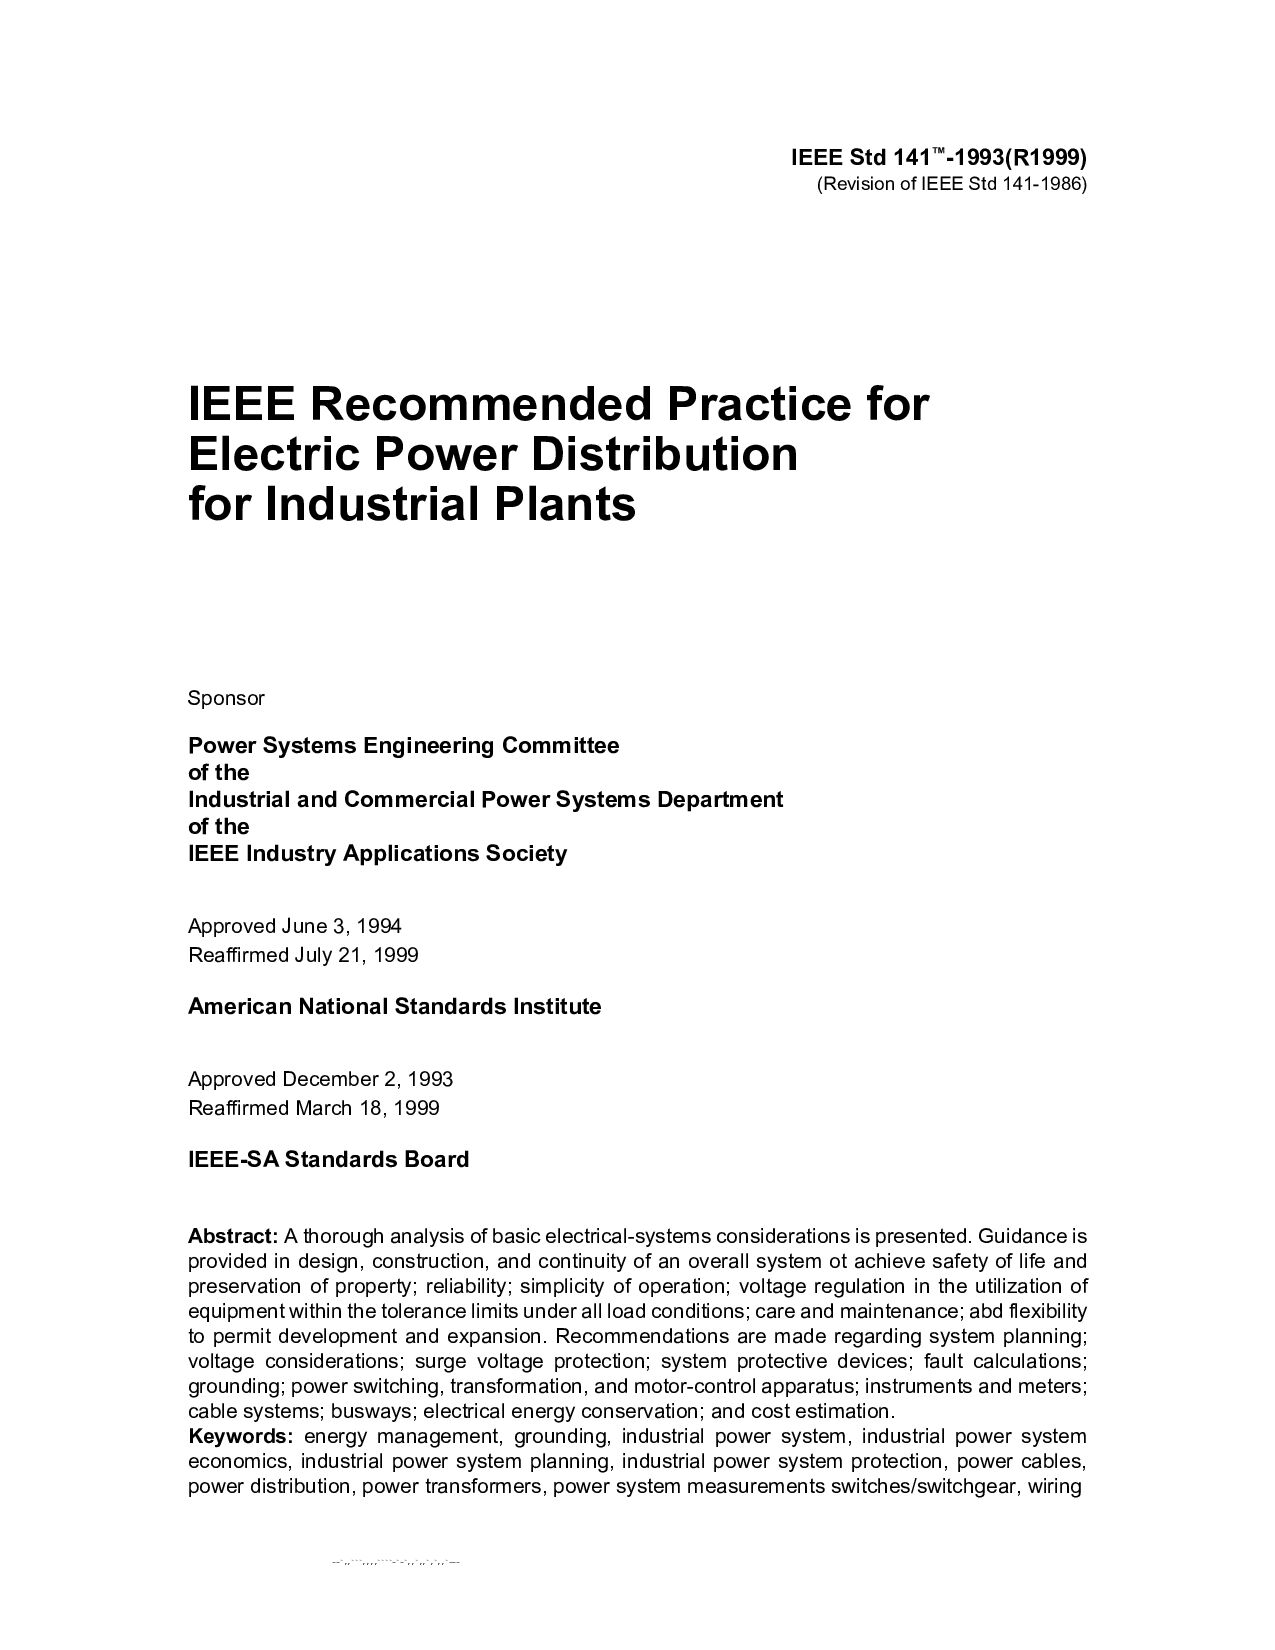 IEEE 141-1993(R1999)